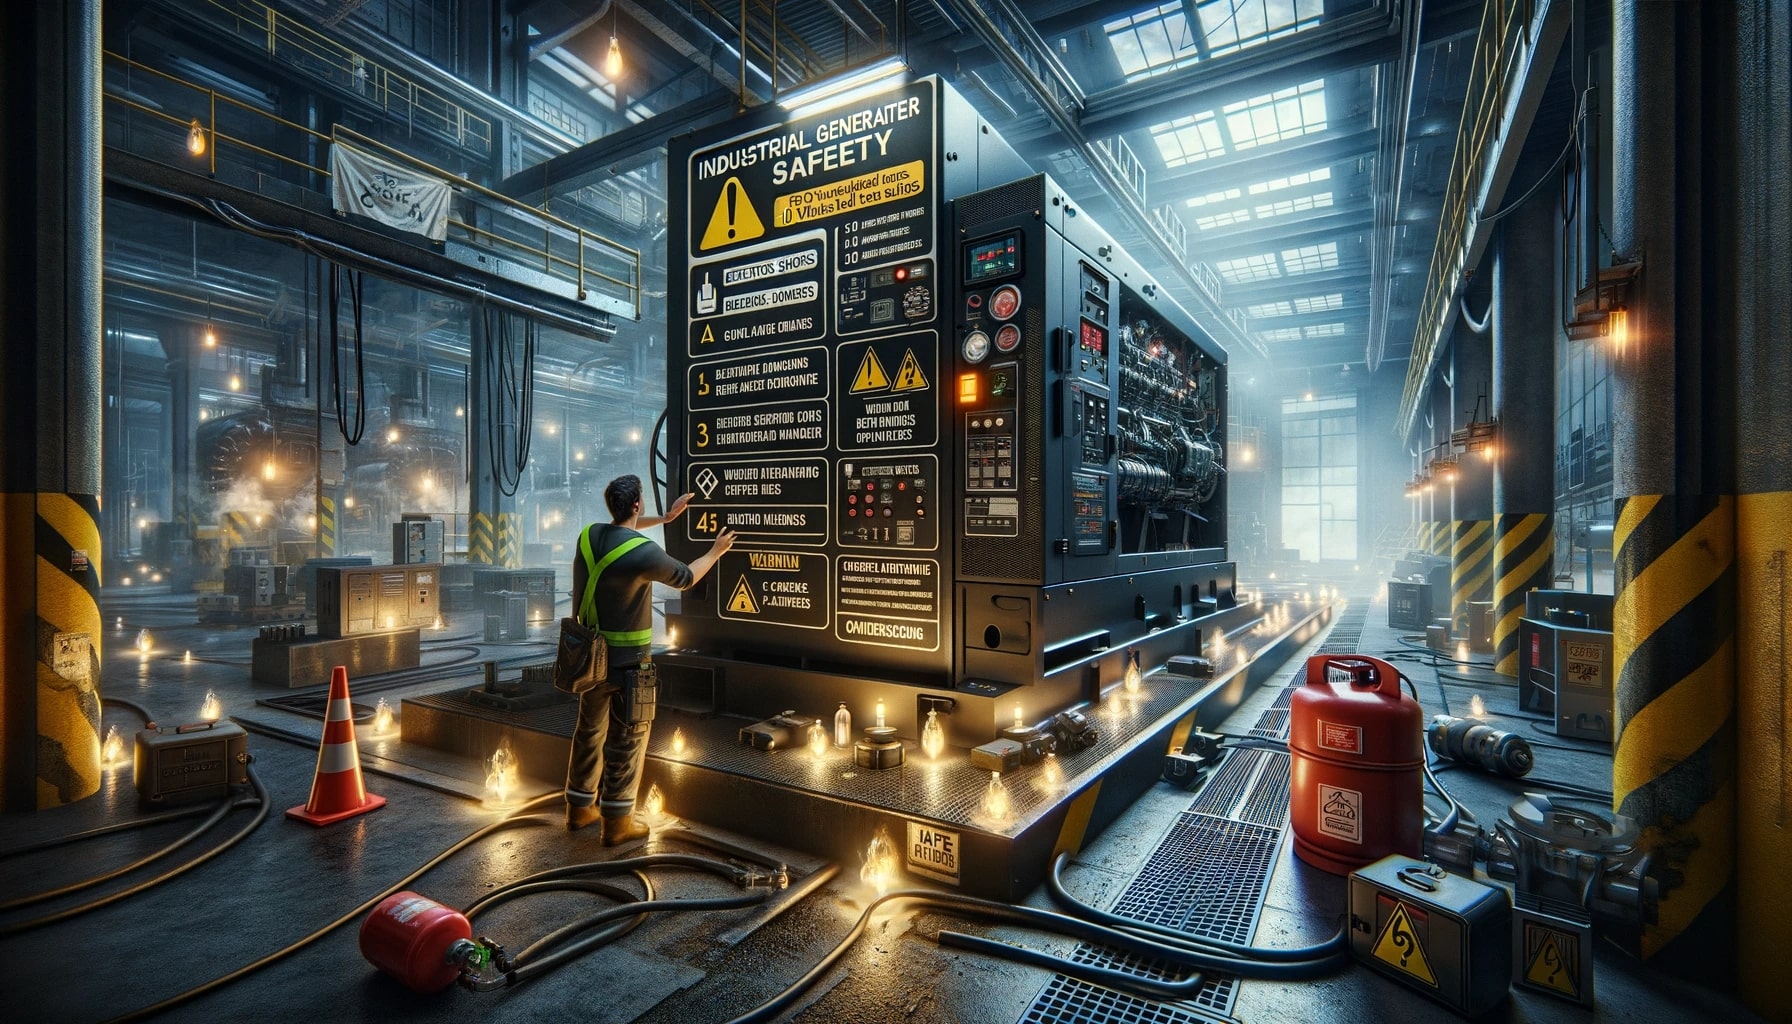 Industrial Generator Safety: 10 Vital Tips